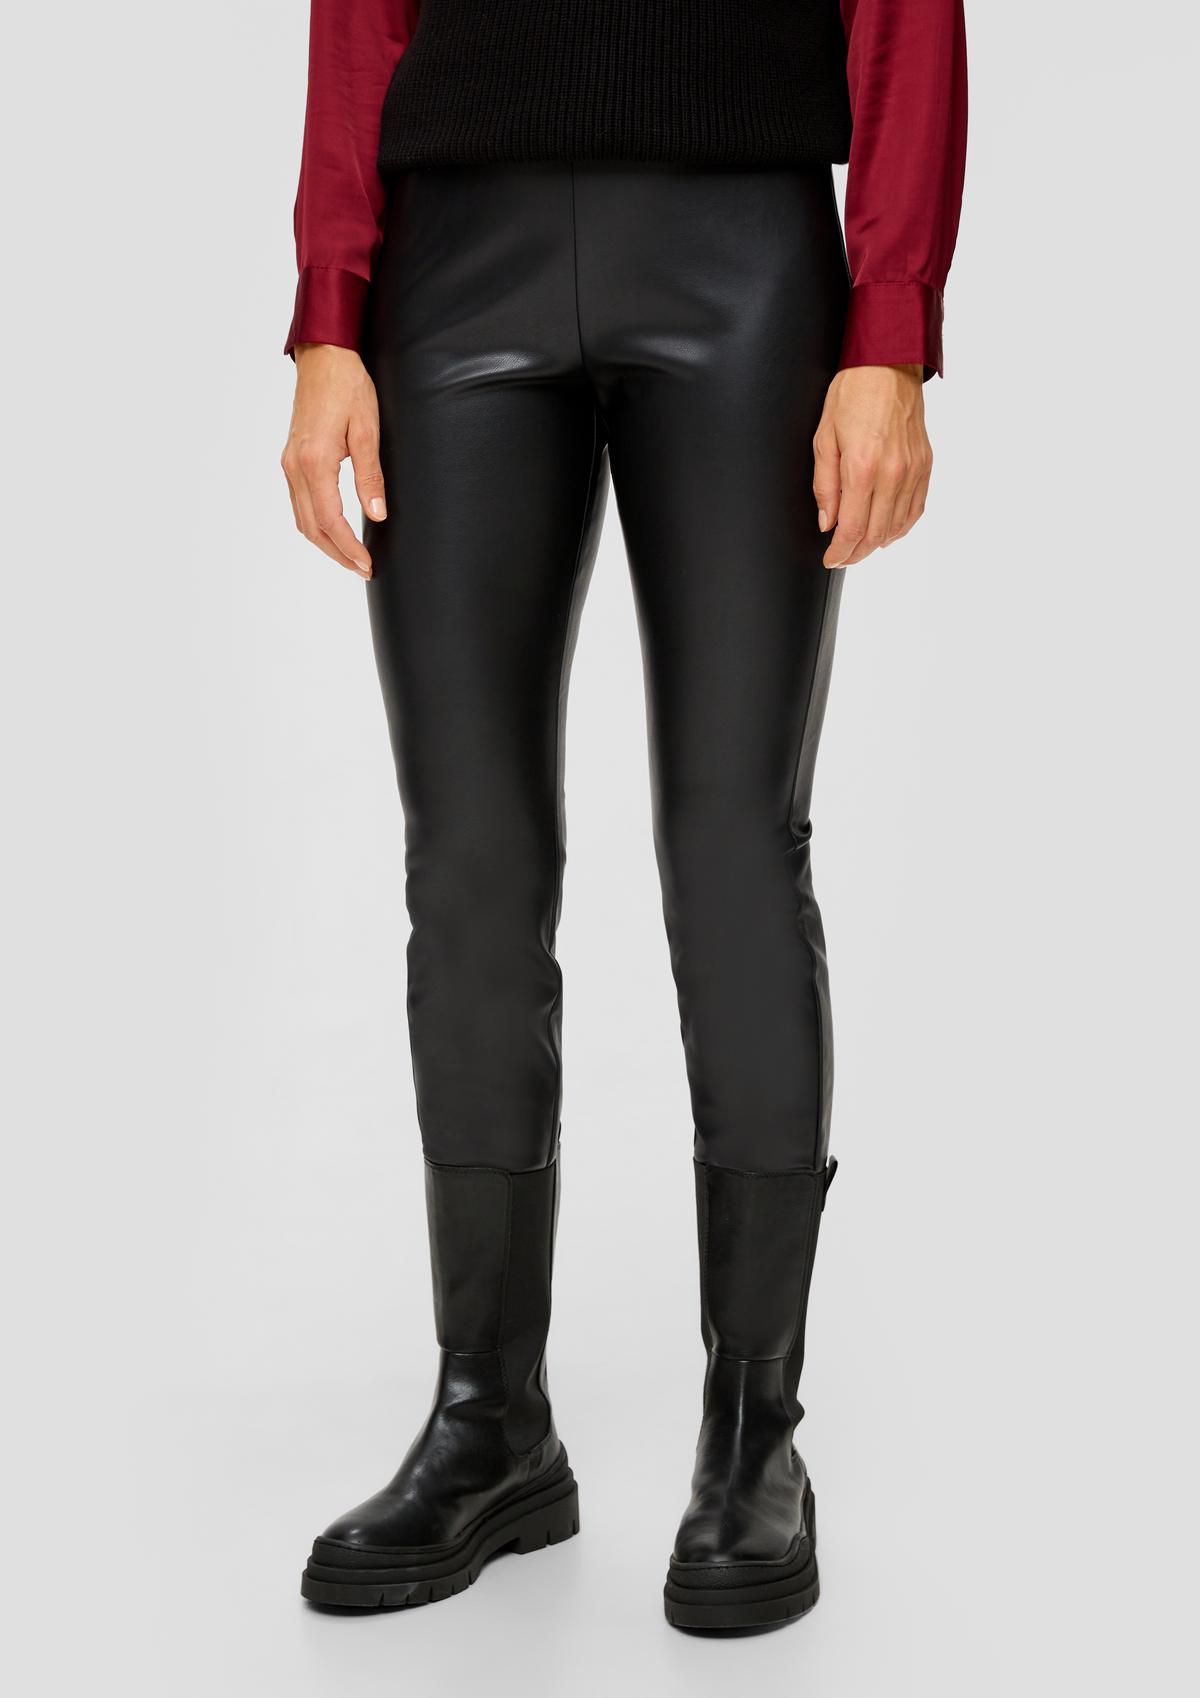 Extra leggings slim fit: - leather black faux